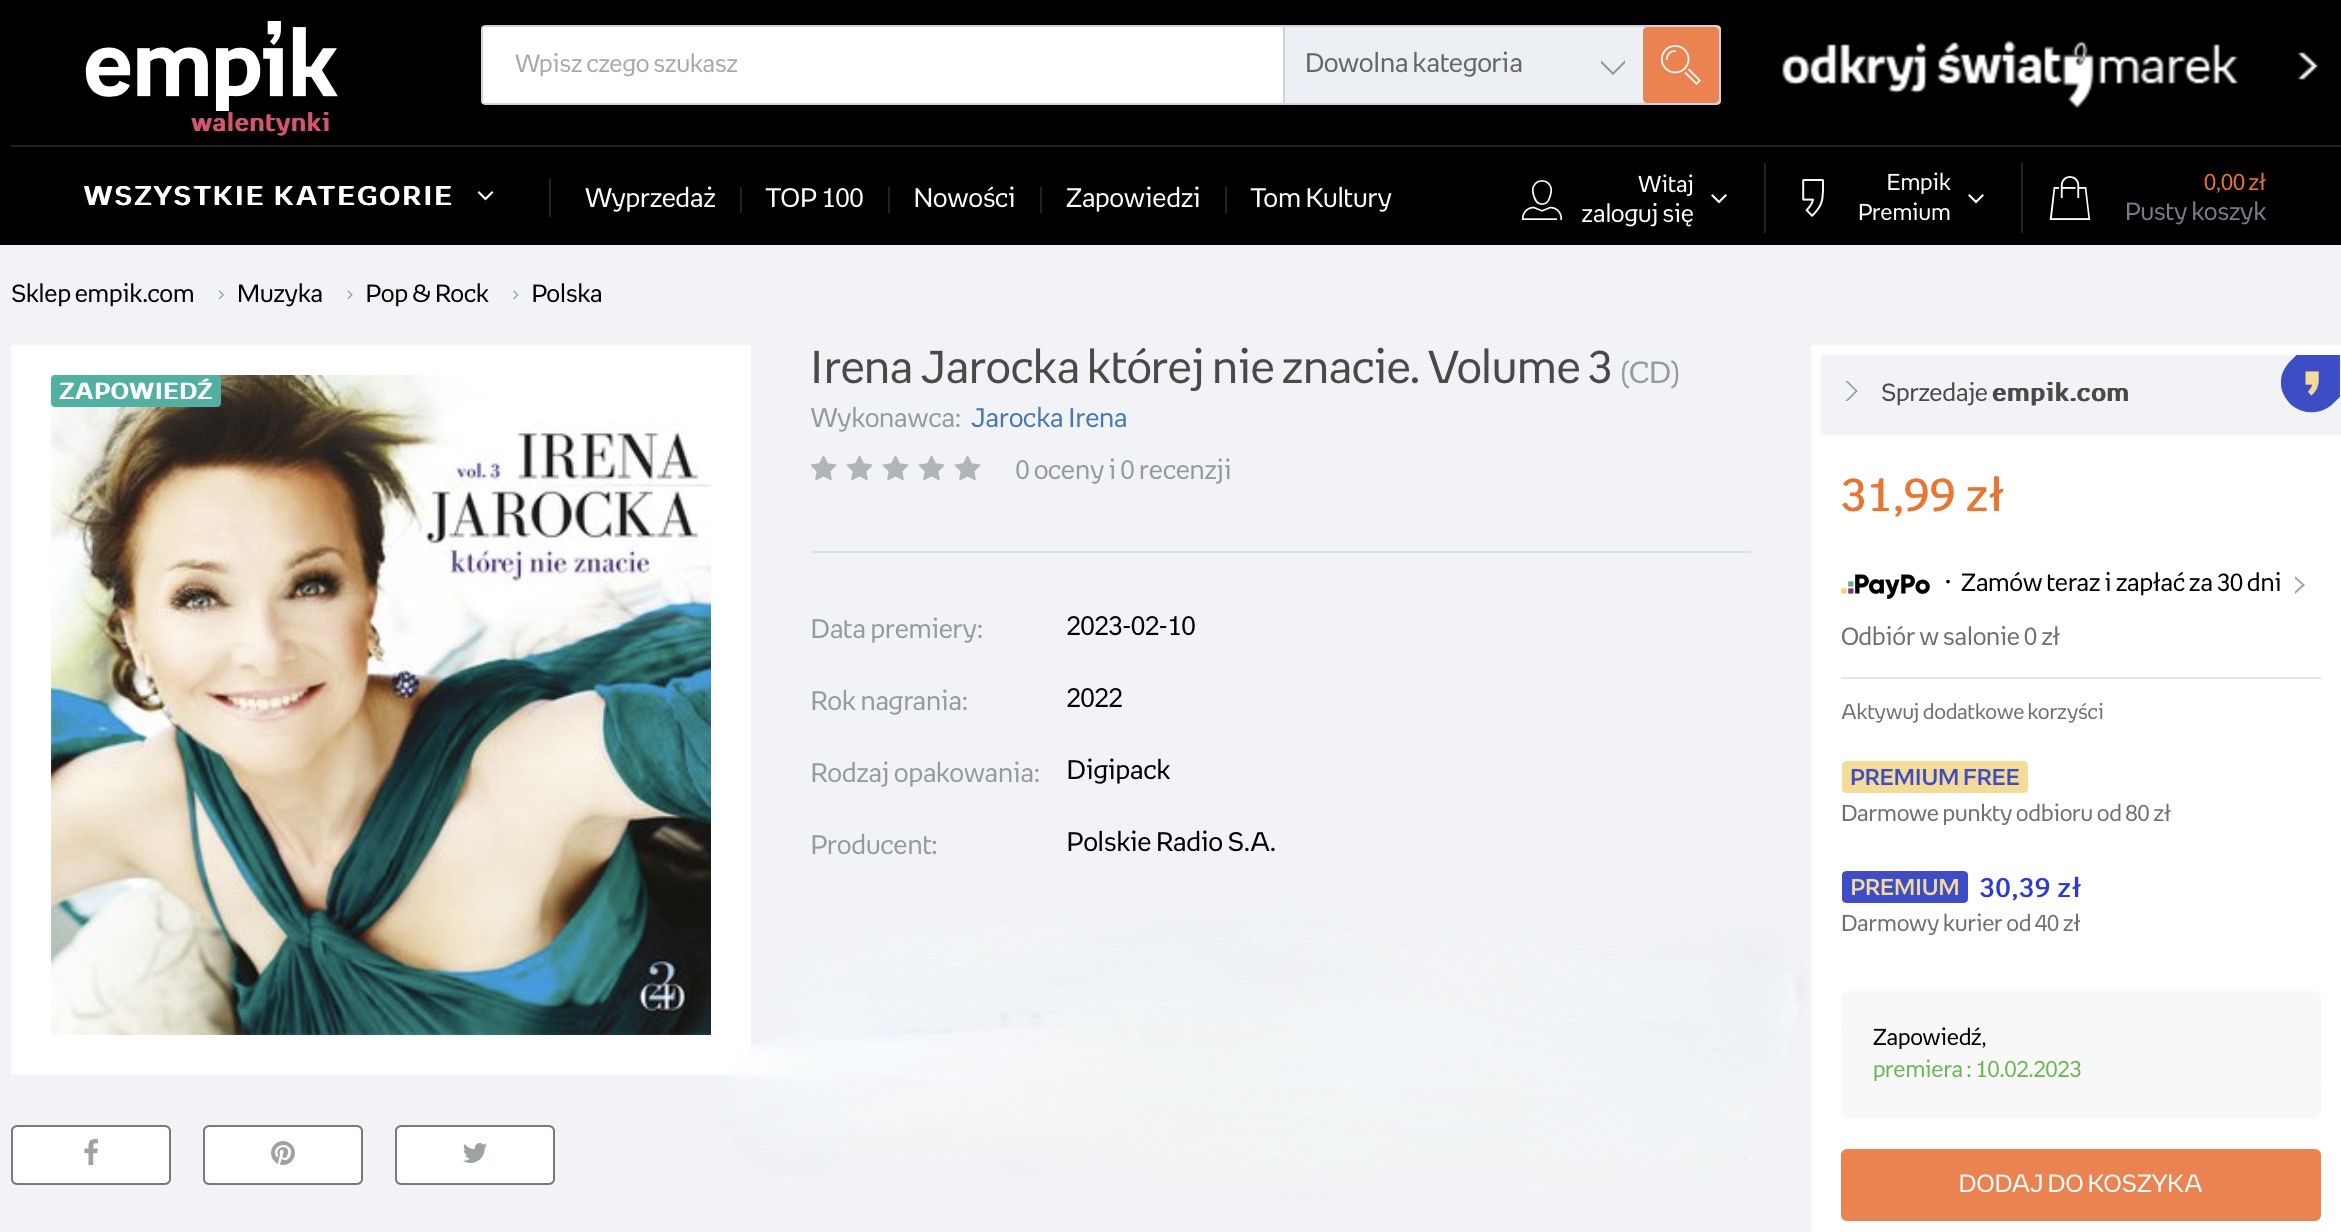 http://irenajarocka.pl/webdocs/image/2023/KG/CD-Irena-Jarocka-ktorej-nie-znacie-vol-3-reklama-empik.jpg